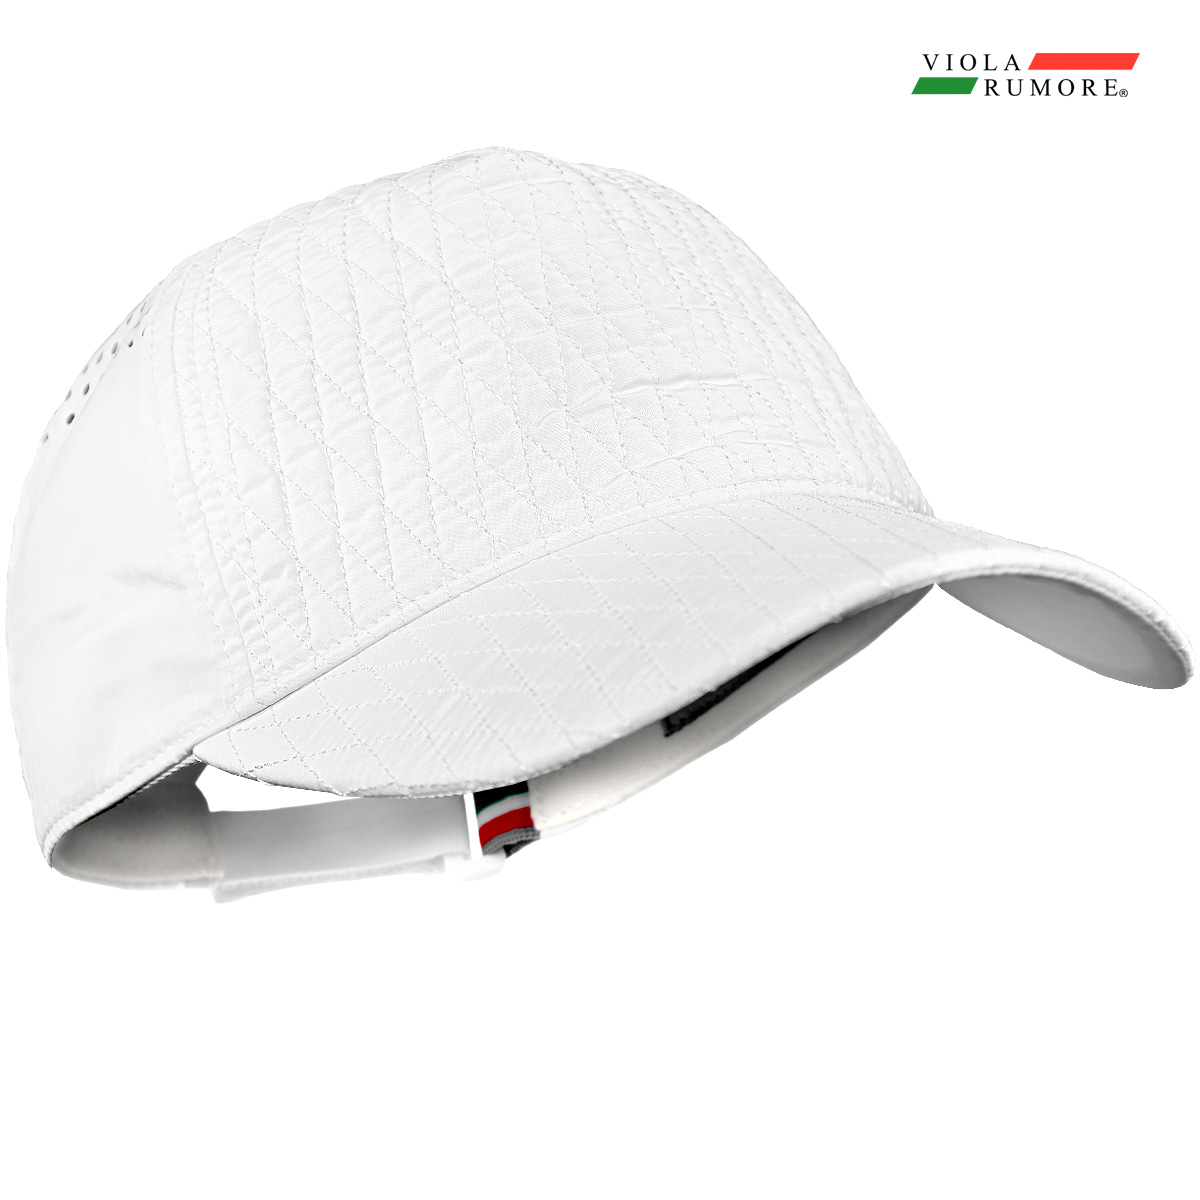 VIOLA rumore ヴィオラ ビオラ メッシュキャップ パンチング ダイヤキルト メンズ サイズ調整可能 帽子 mens(ホワイト白) 11350